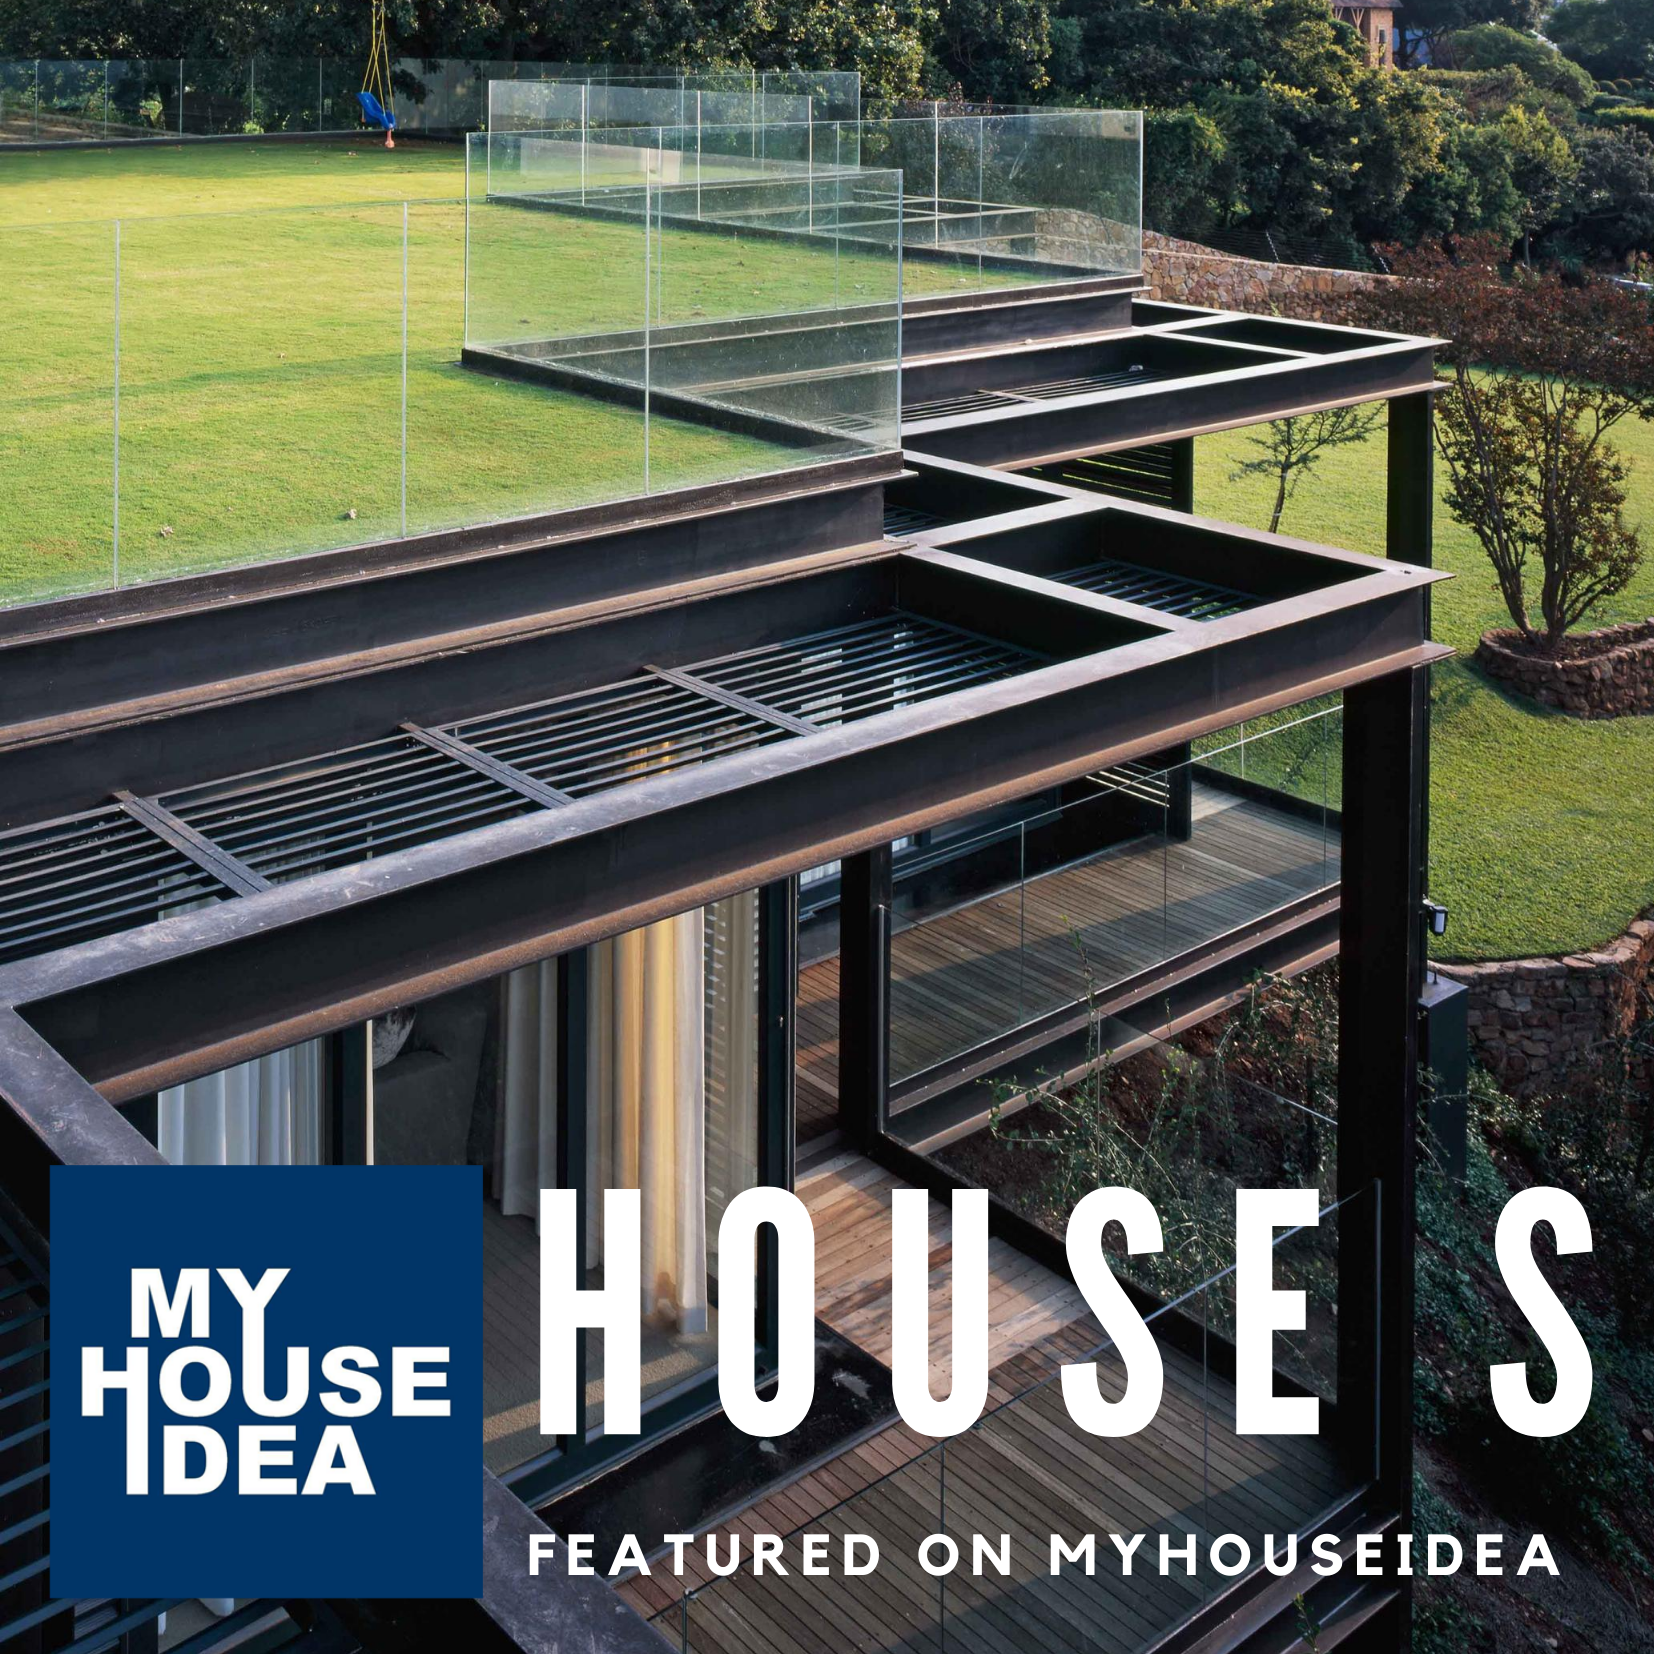 House S featured on My House Idea